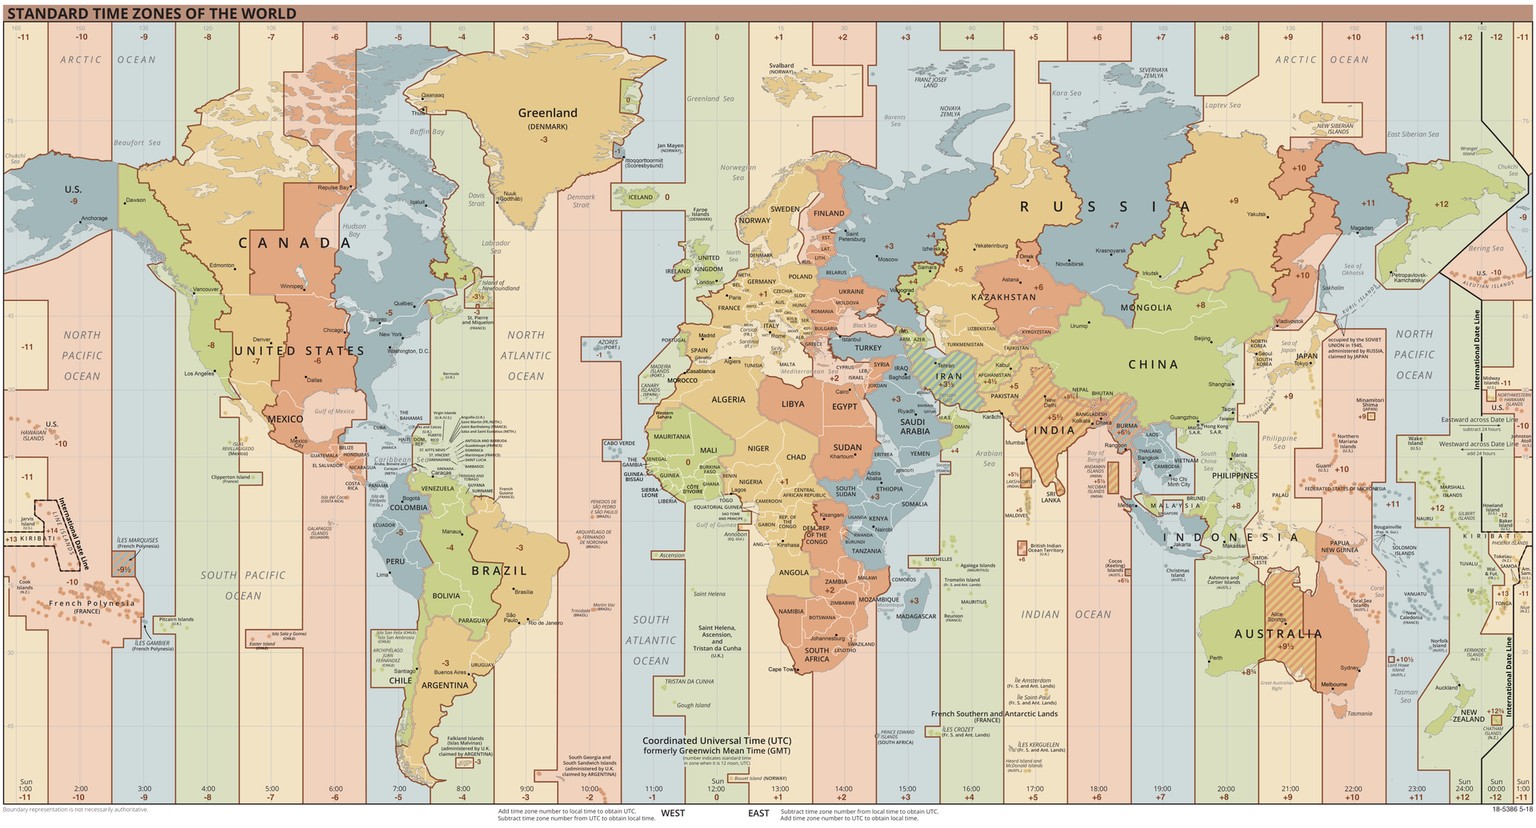 Karte: Zeitzonen der Erde
https://de.wikipedia.org/wiki/Zeitzone#/media/File:Standard_World_Time_Zones.png